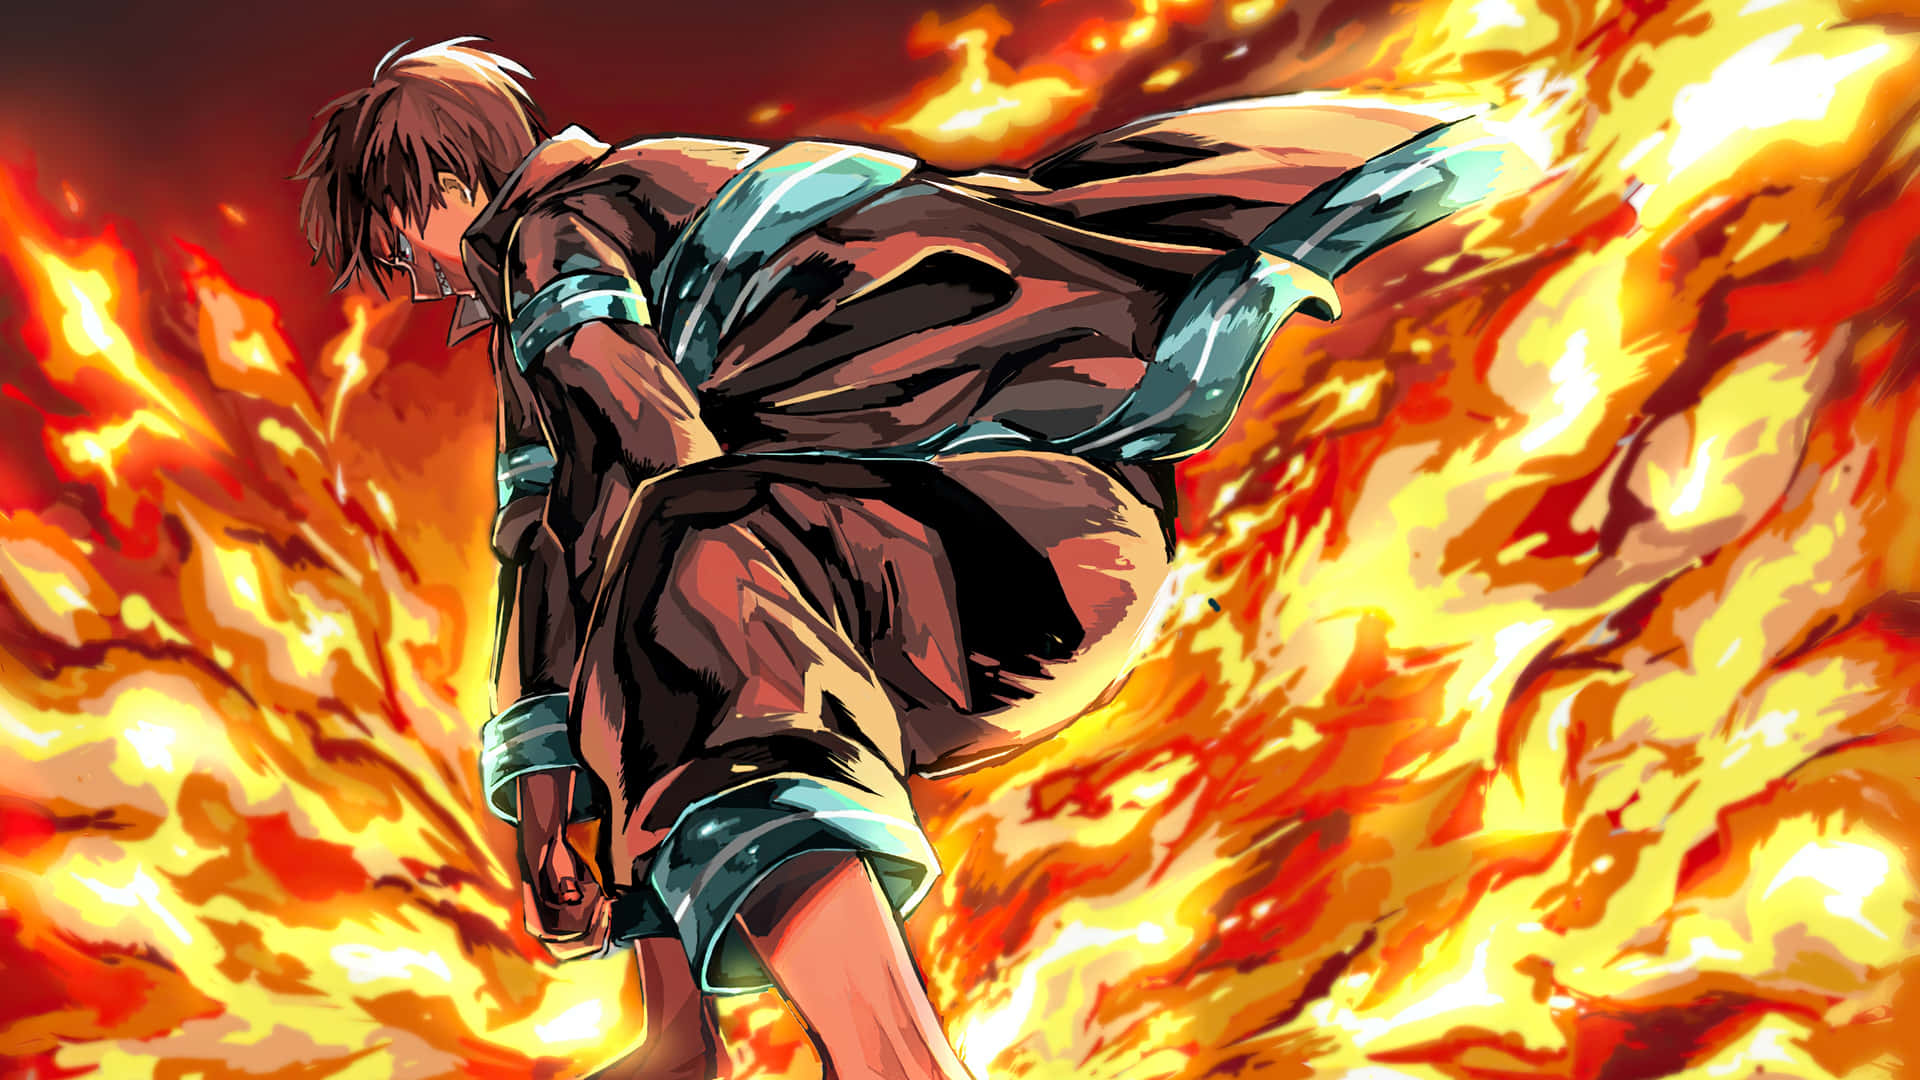 Download Fire Pfp Force Manga Character Wallpaper | Wallpapers.com